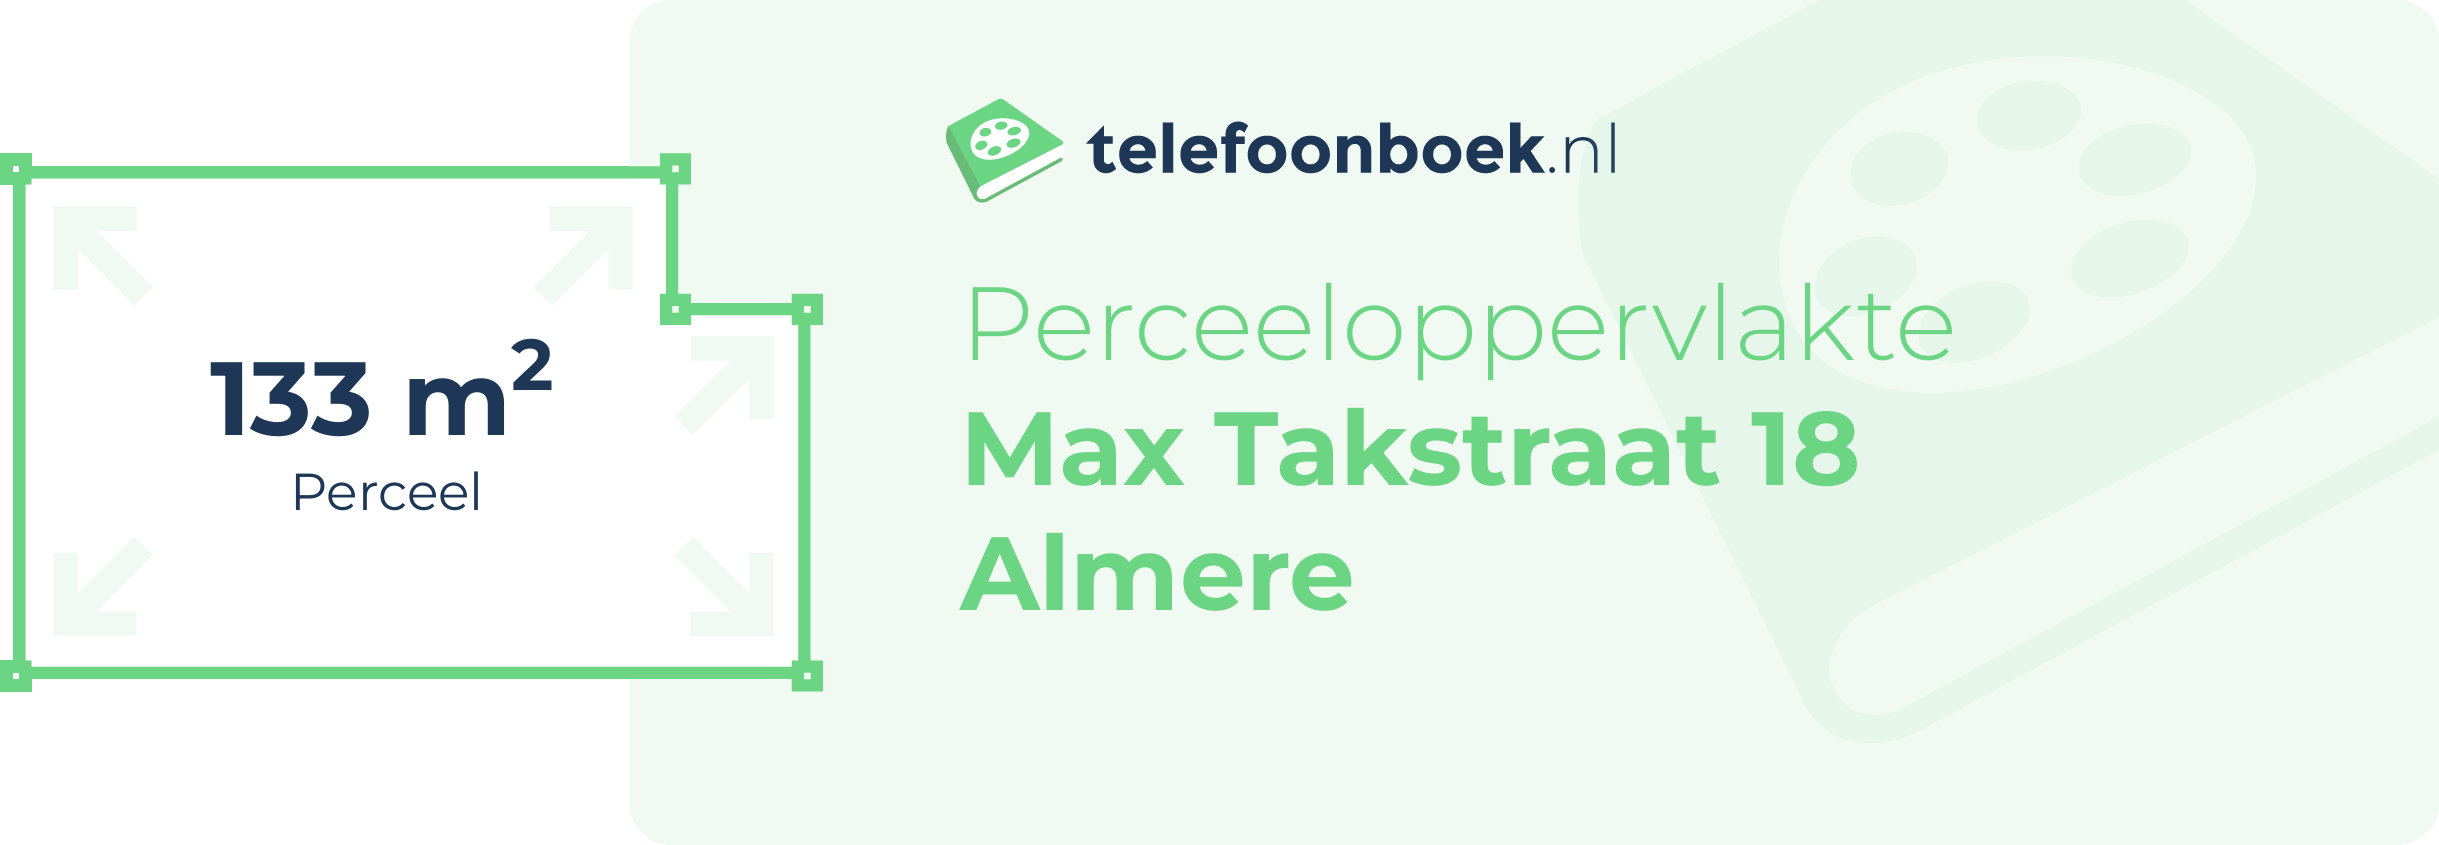 Perceeloppervlakte Max Takstraat 18 Almere